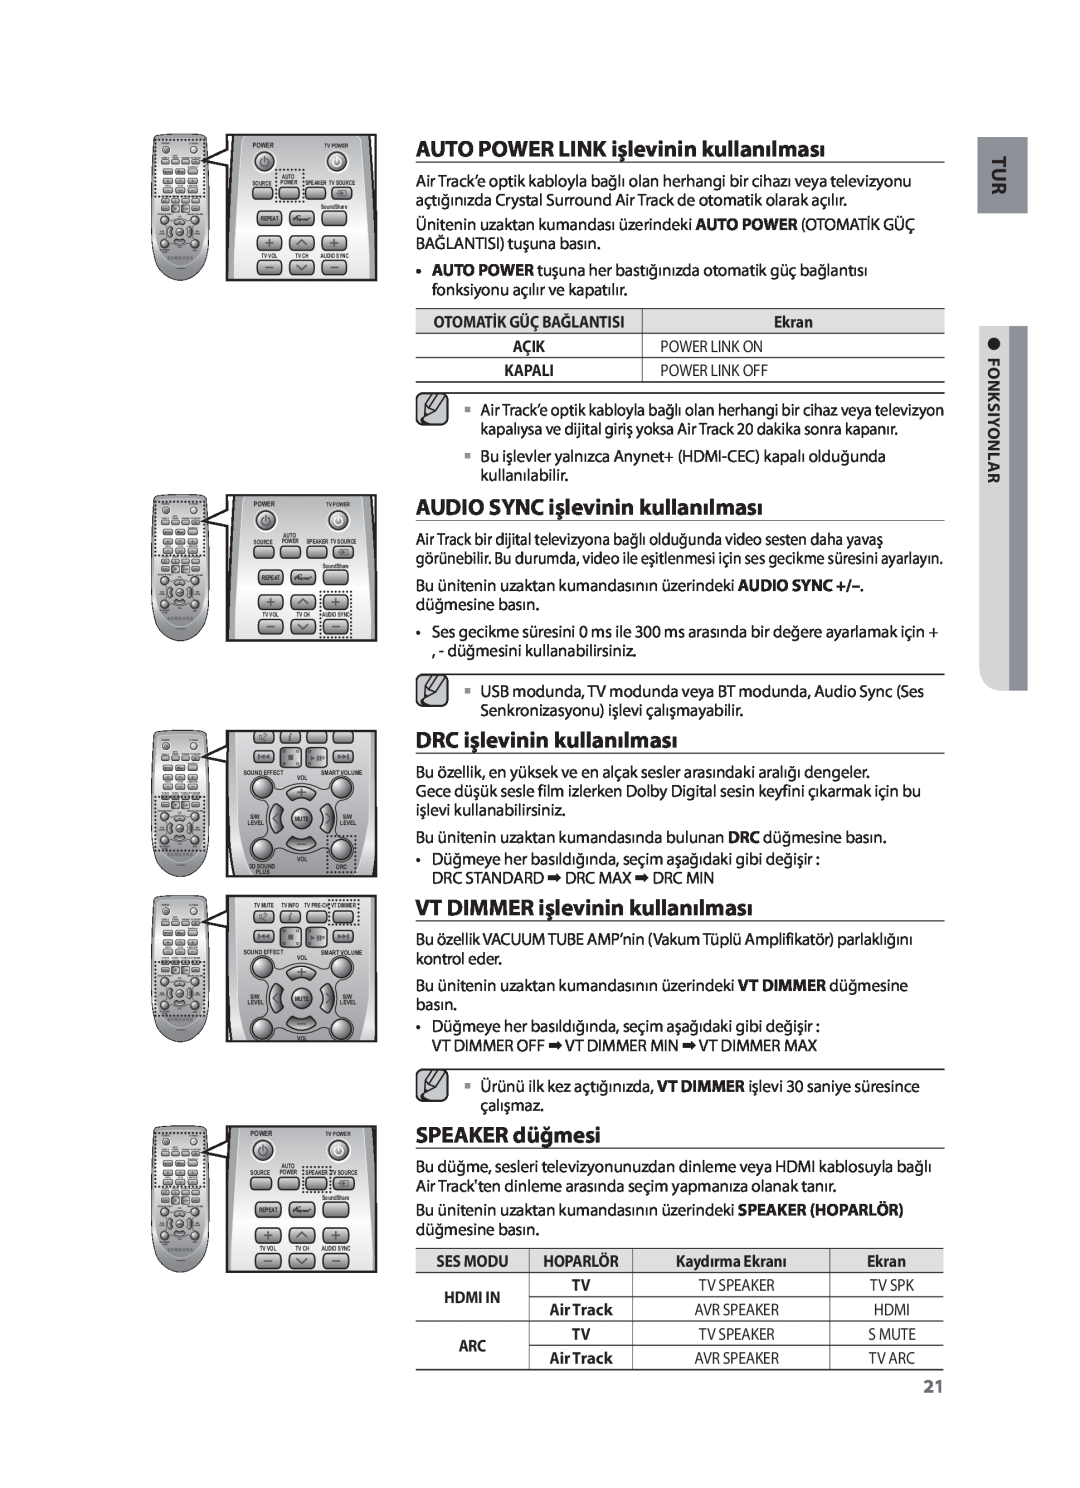 Samsung HW-F751/TK AUTO POWER LINK işlevinin kullanılması, AUDIO SYNC işlevinin kullanılması, DRC işlevinin kullanılması 